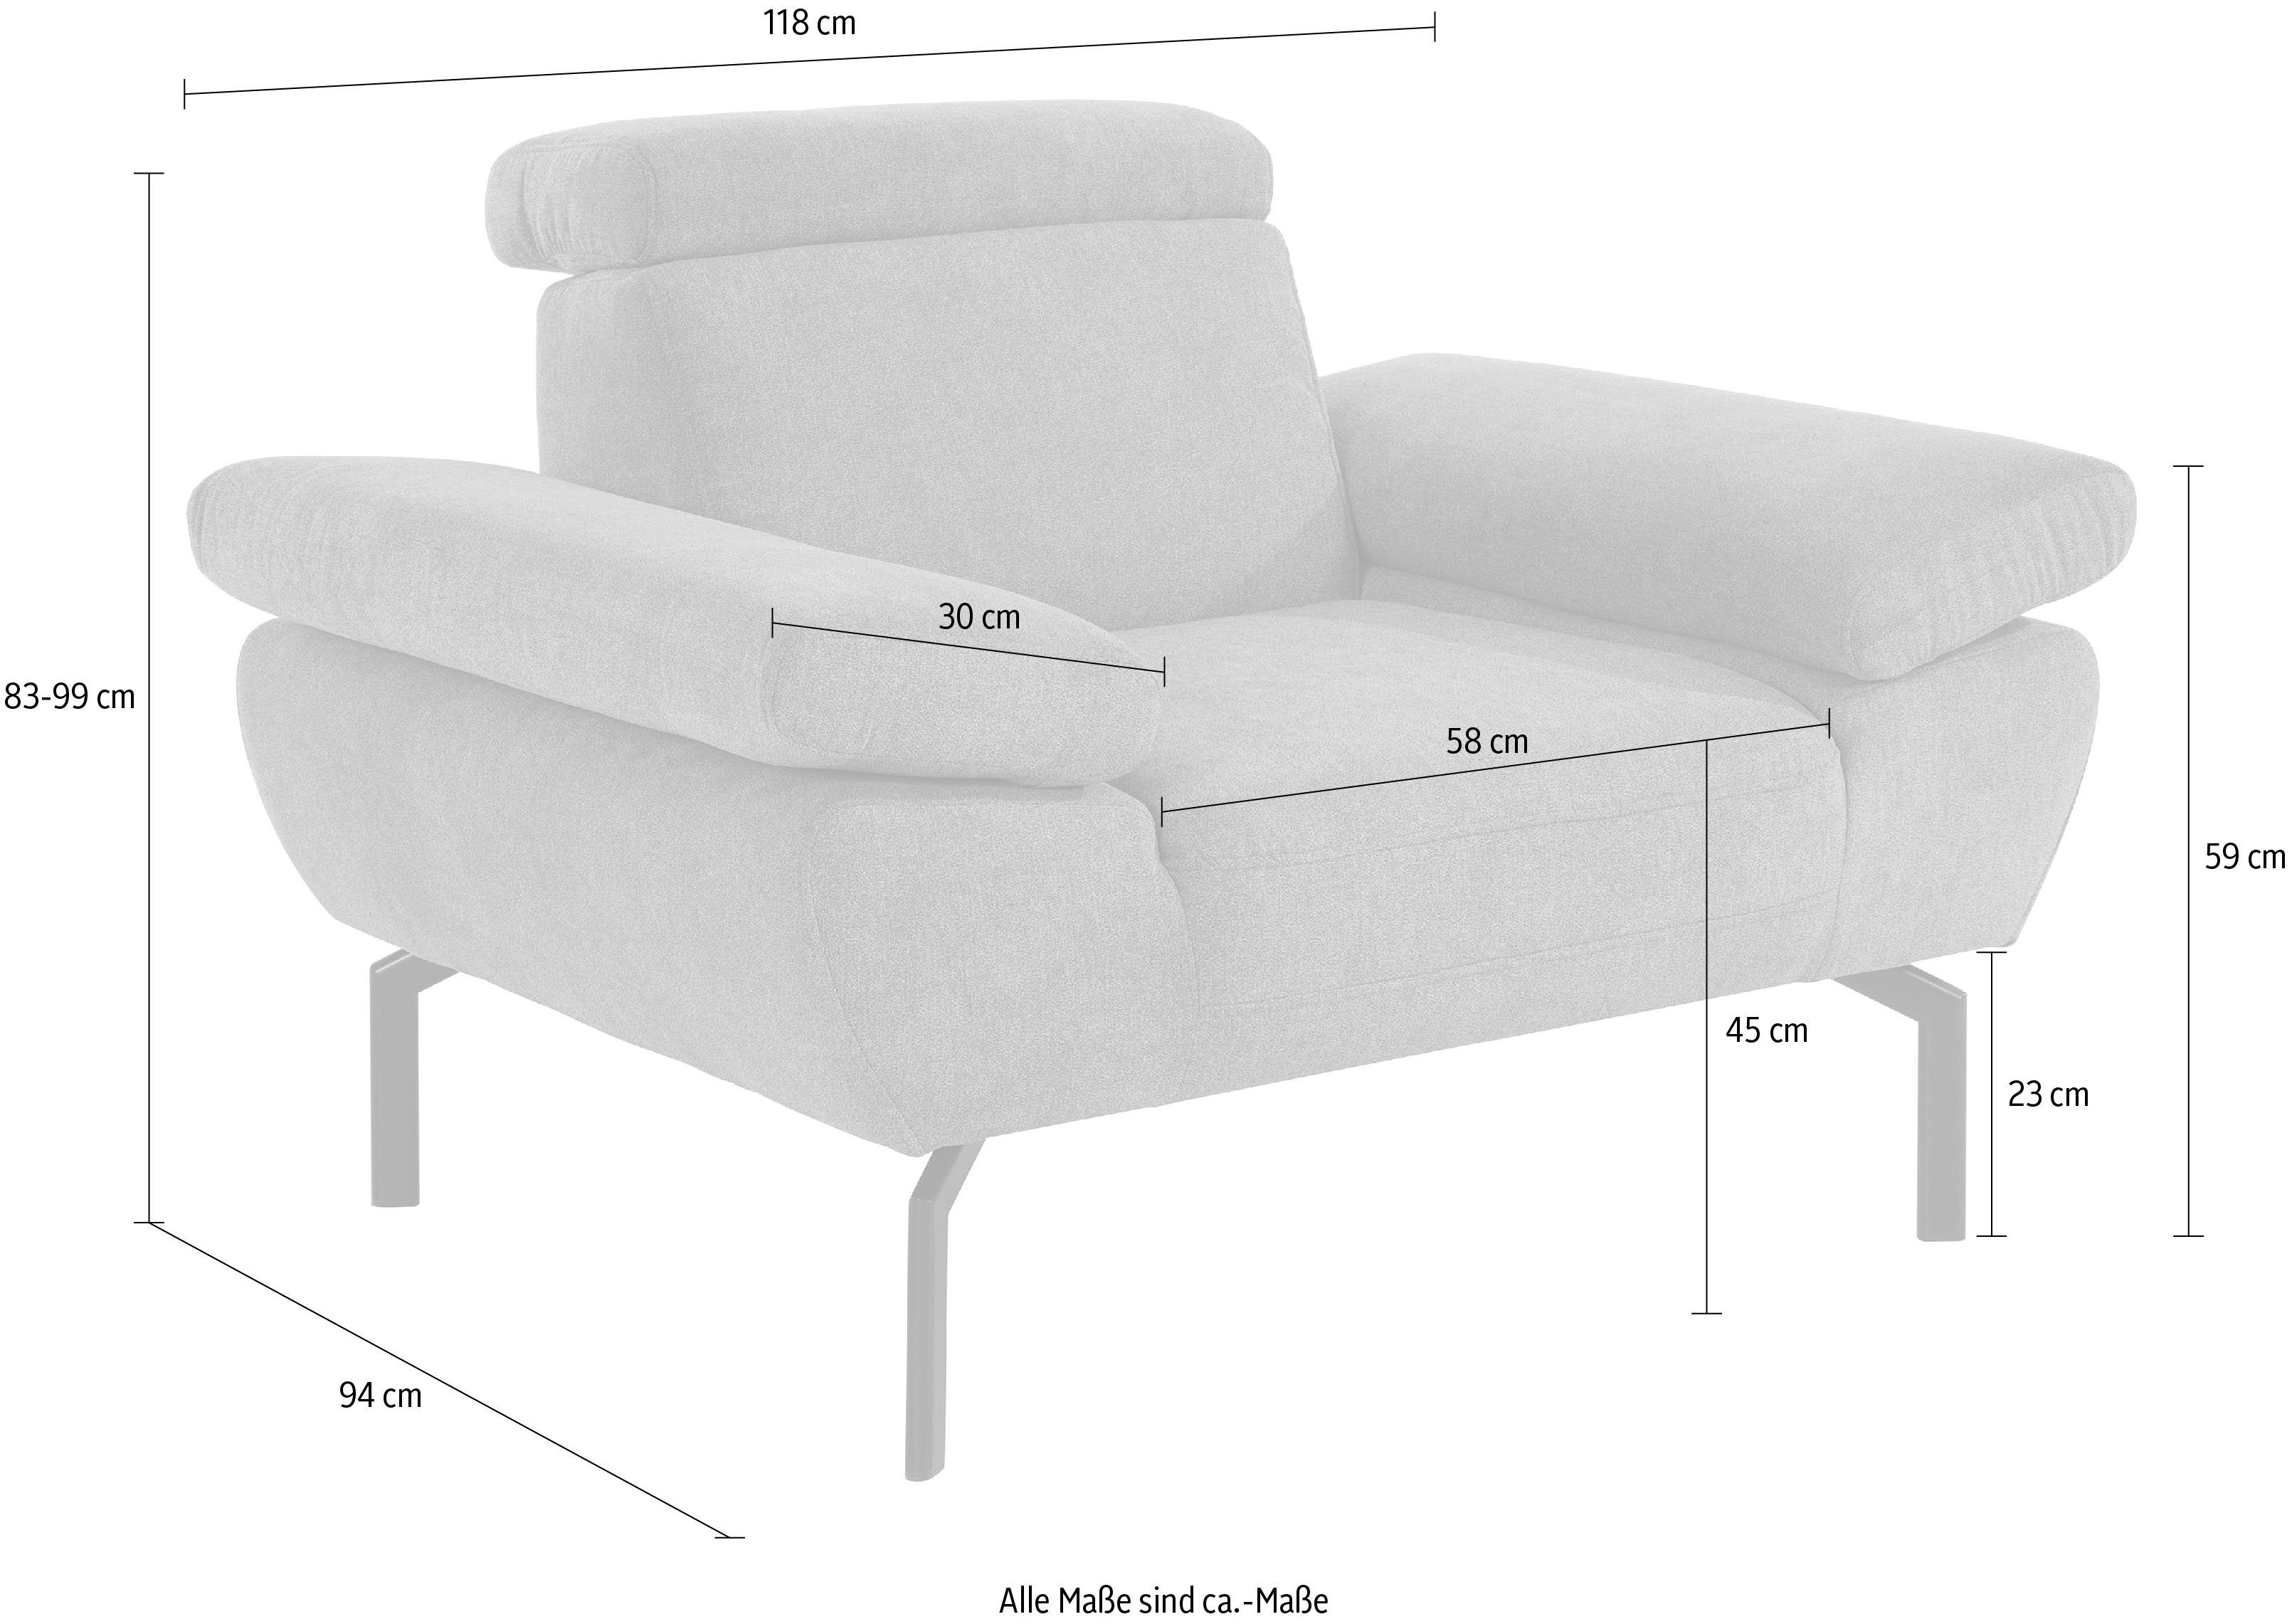 of Luxus, wahlweise Places Luxus-Microfaser mit in Lederoptik Rückenverstellung, Trapino Style Sessel